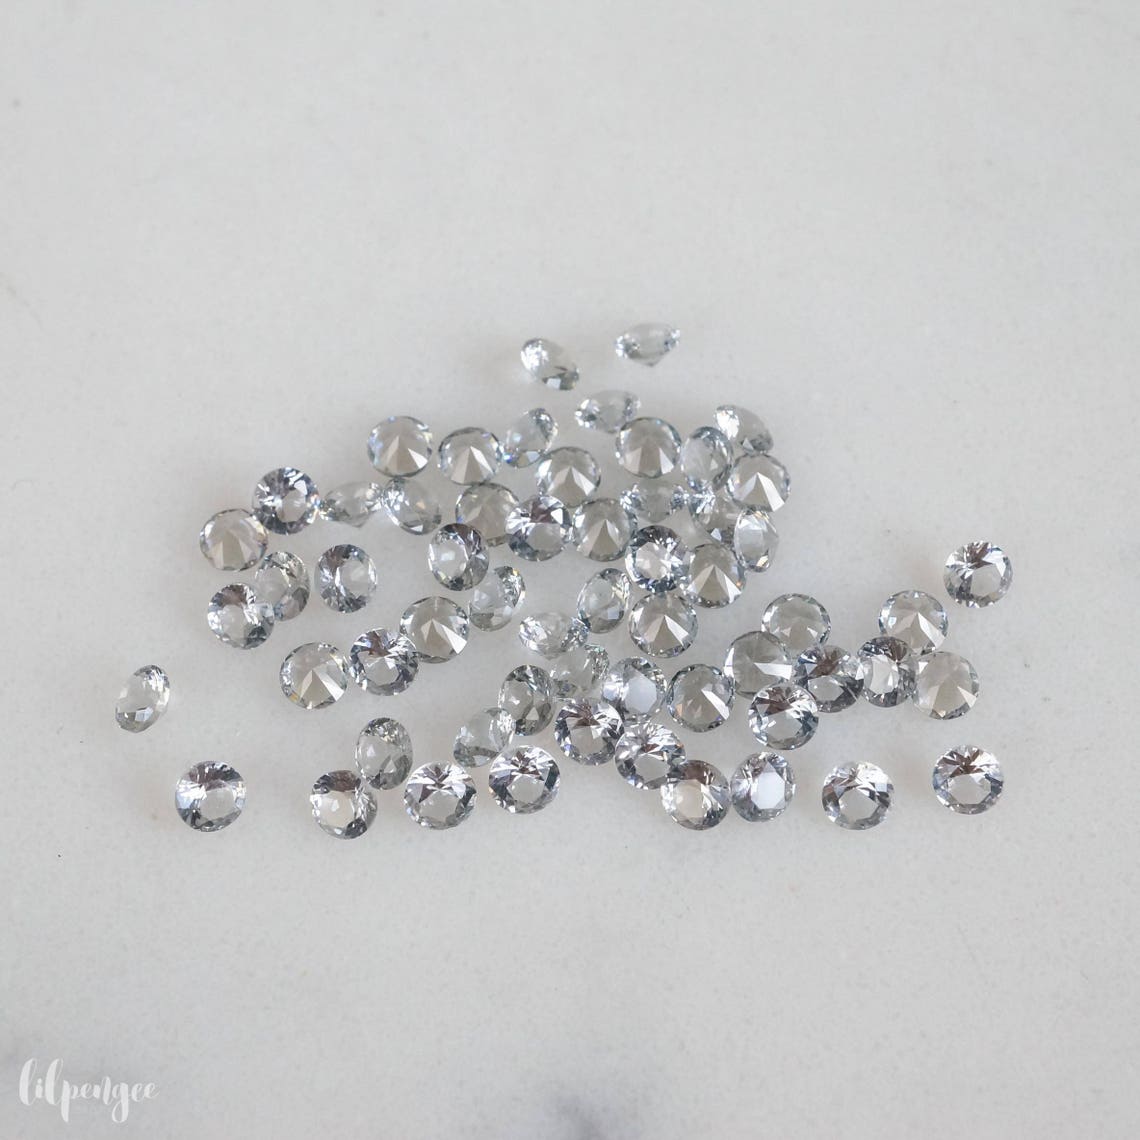 3mm carbon gray nano gemstones. light gray gems. lab grown | Etsy